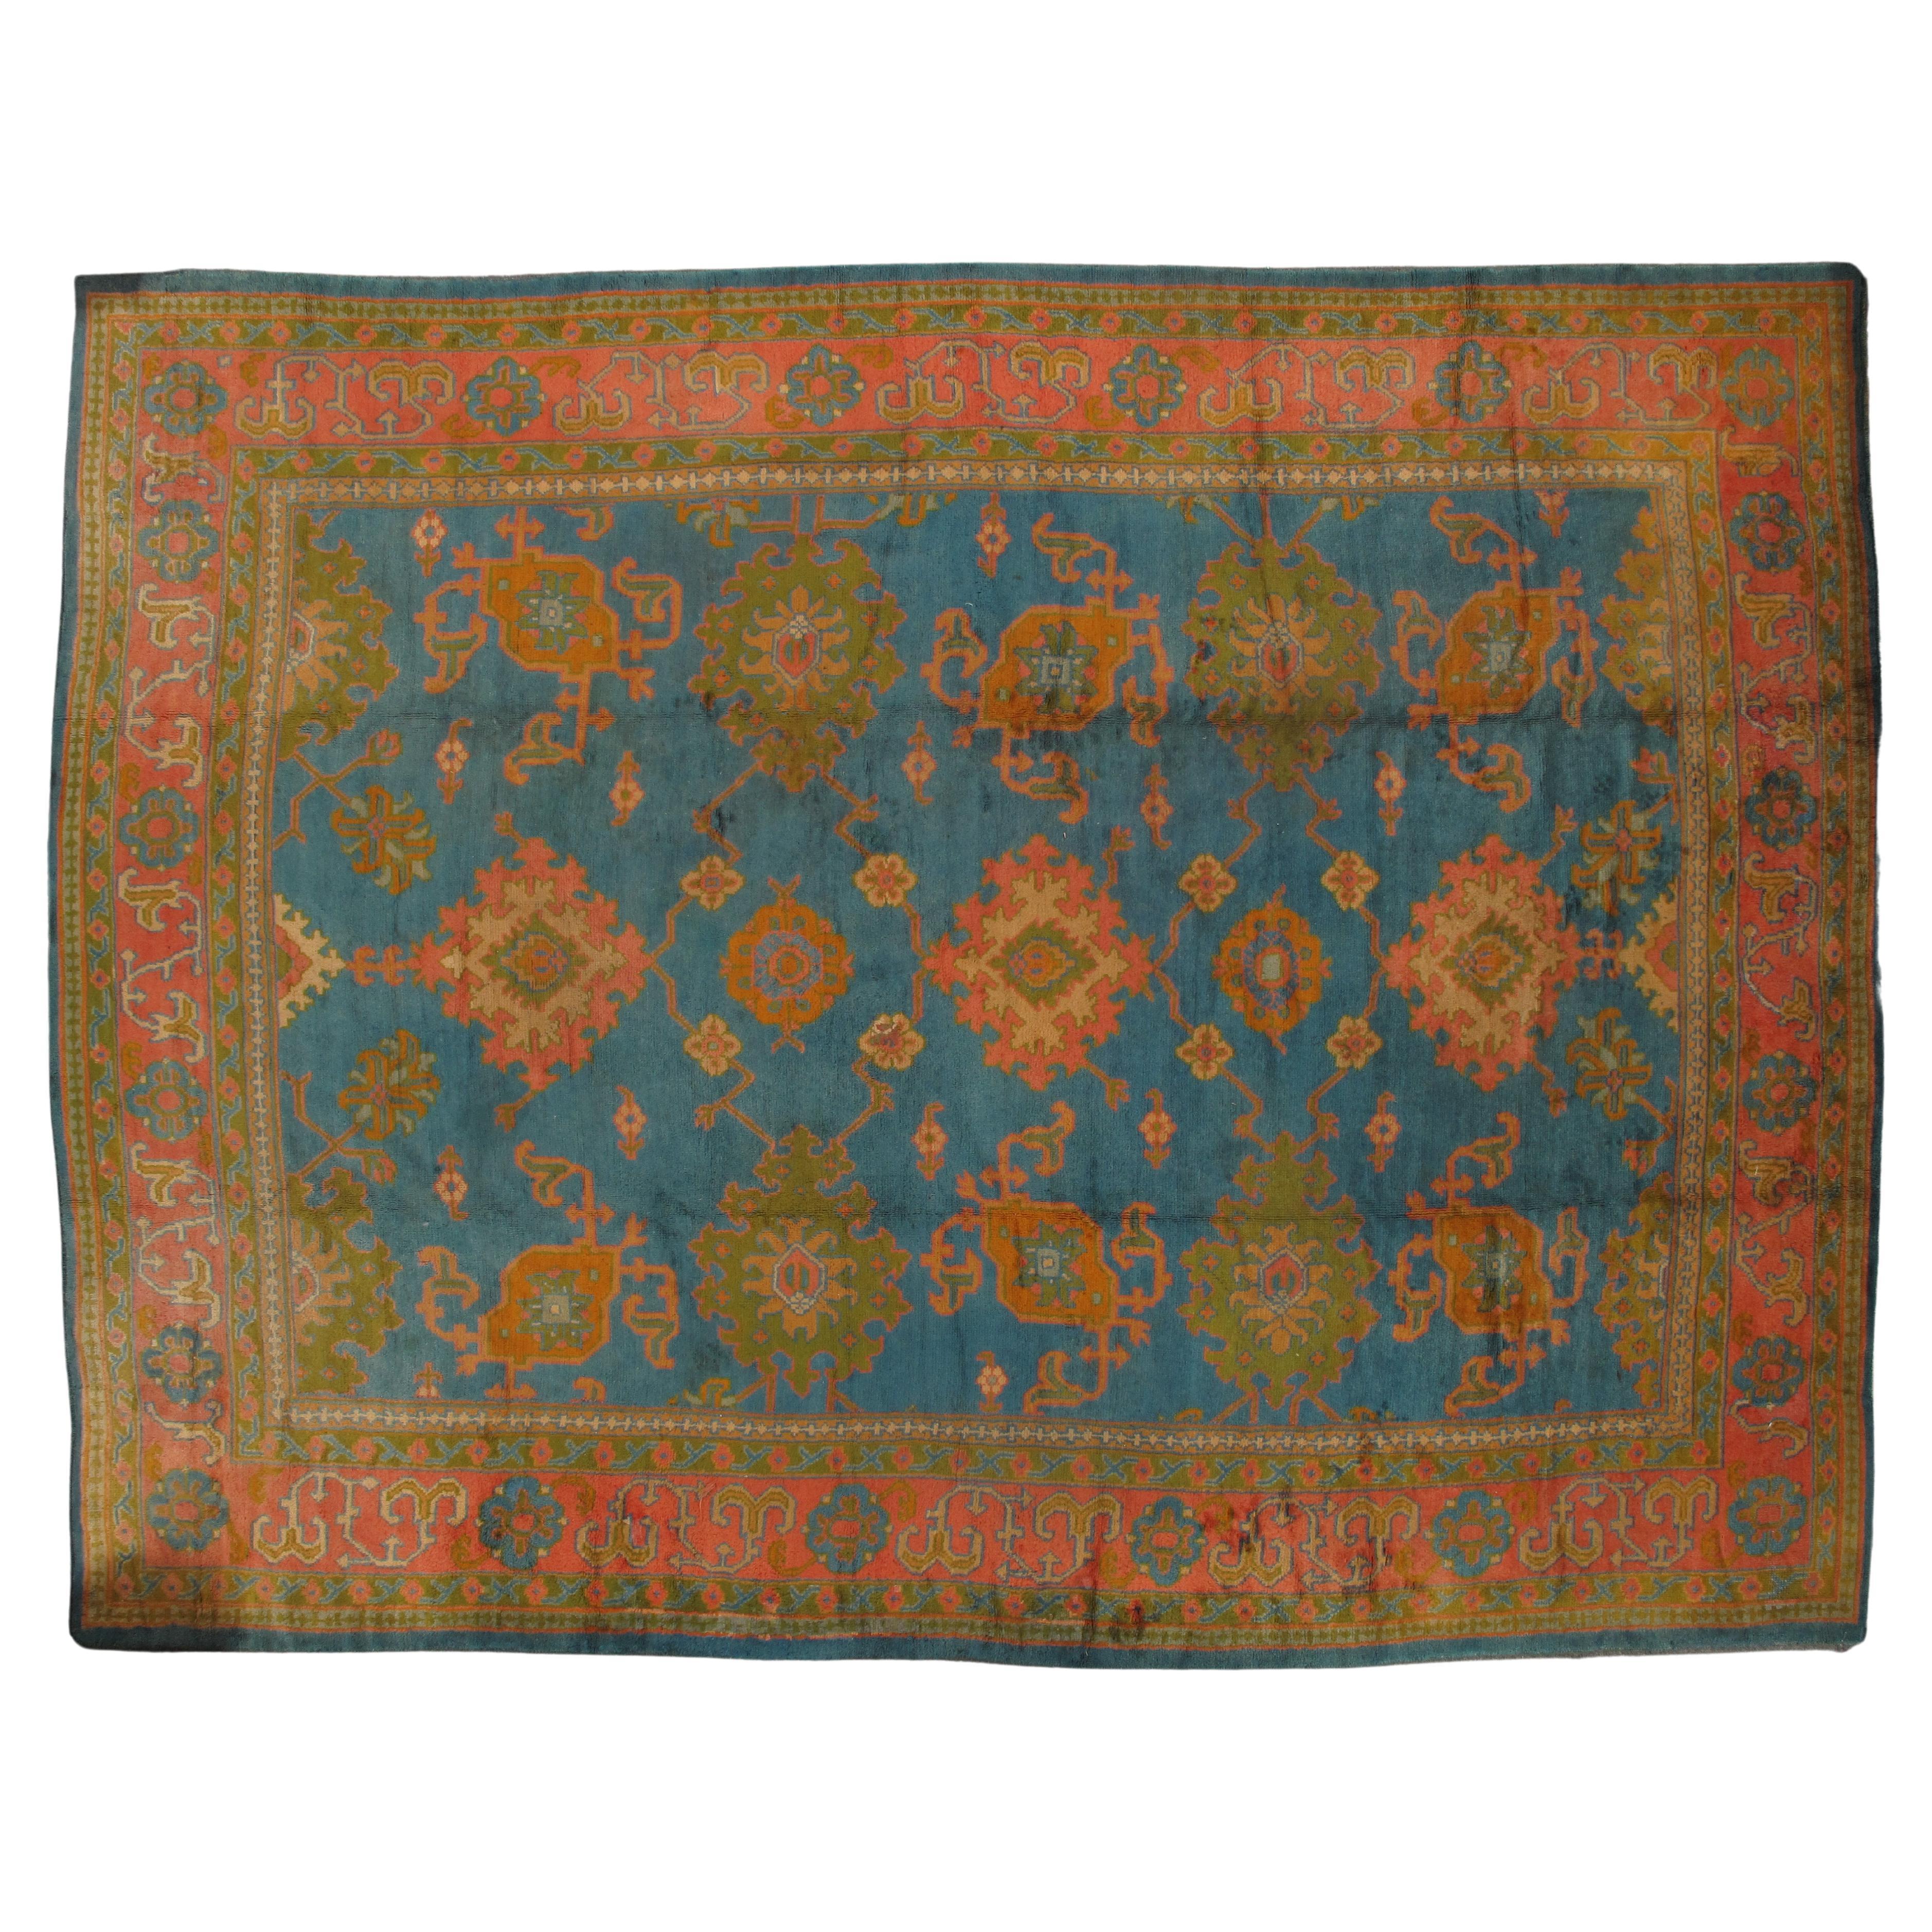 Early 20th Century Antique Irish Donegal Carpet.
Light Blue Allover design.
11' 10